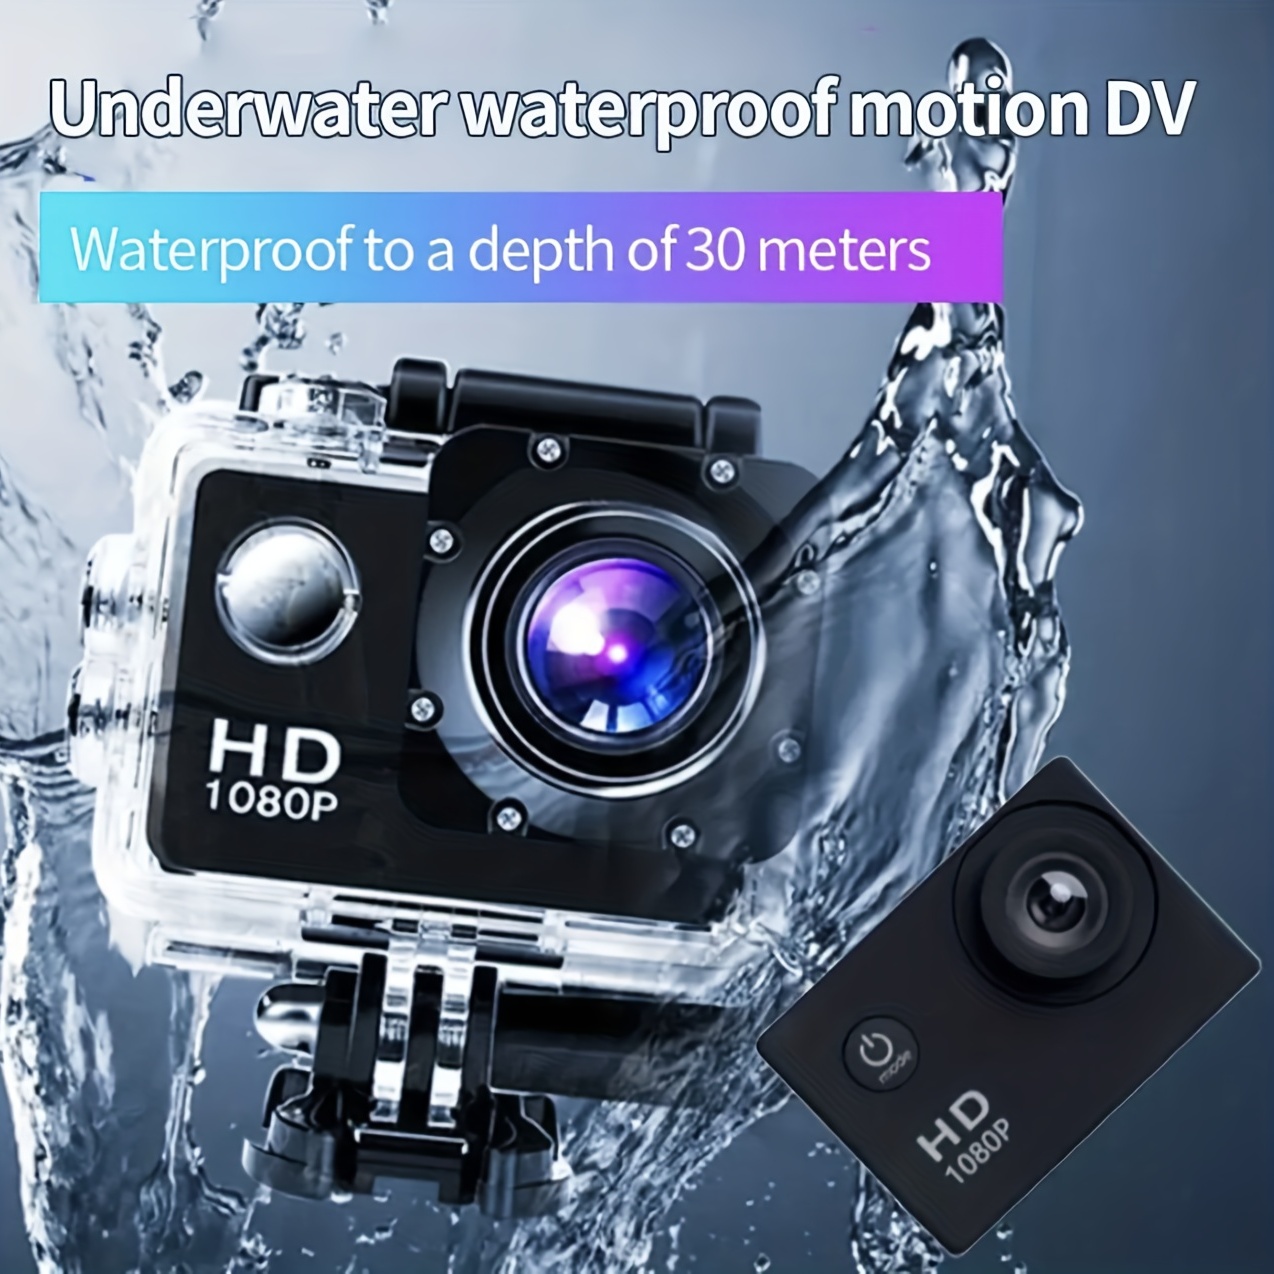 Action Cam, 1080p@30fps, 12 MPixel, Waterproof up to: 30.0 m